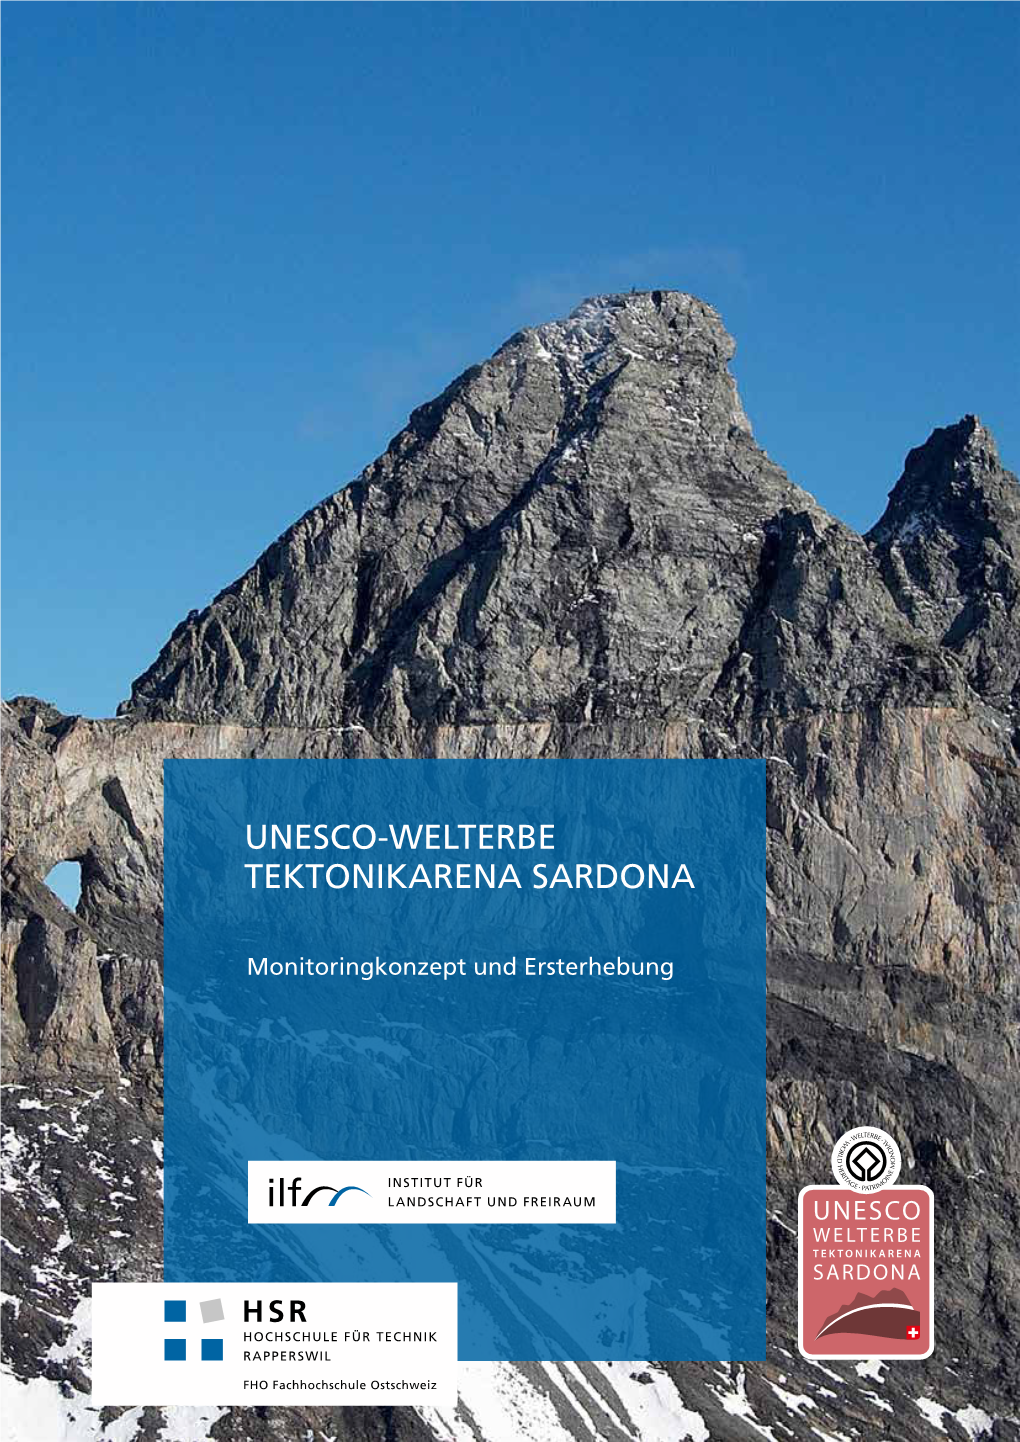 Unesco-Welterbe Tektonikarena Sardona